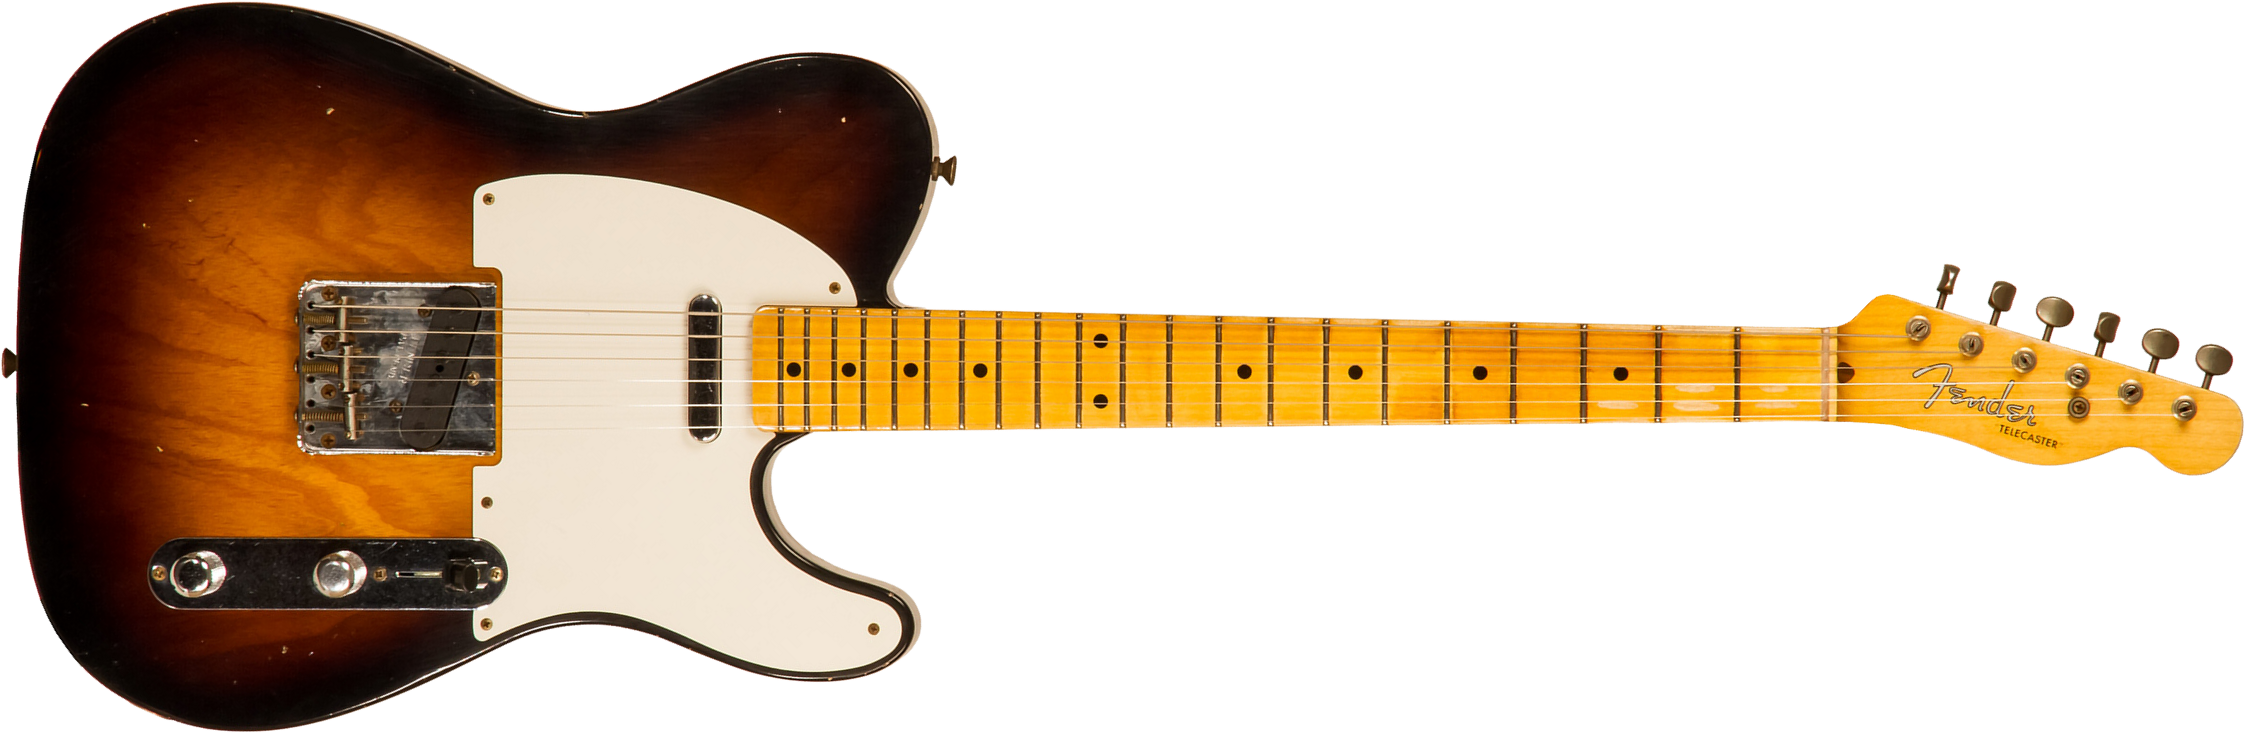 Fender Custom Shop Tele 1955 Ltd 2s Ht Mn #cz560649 - Relic Wide Fade 2-color Sunburst - Televorm elektrische gitaar - Main picture